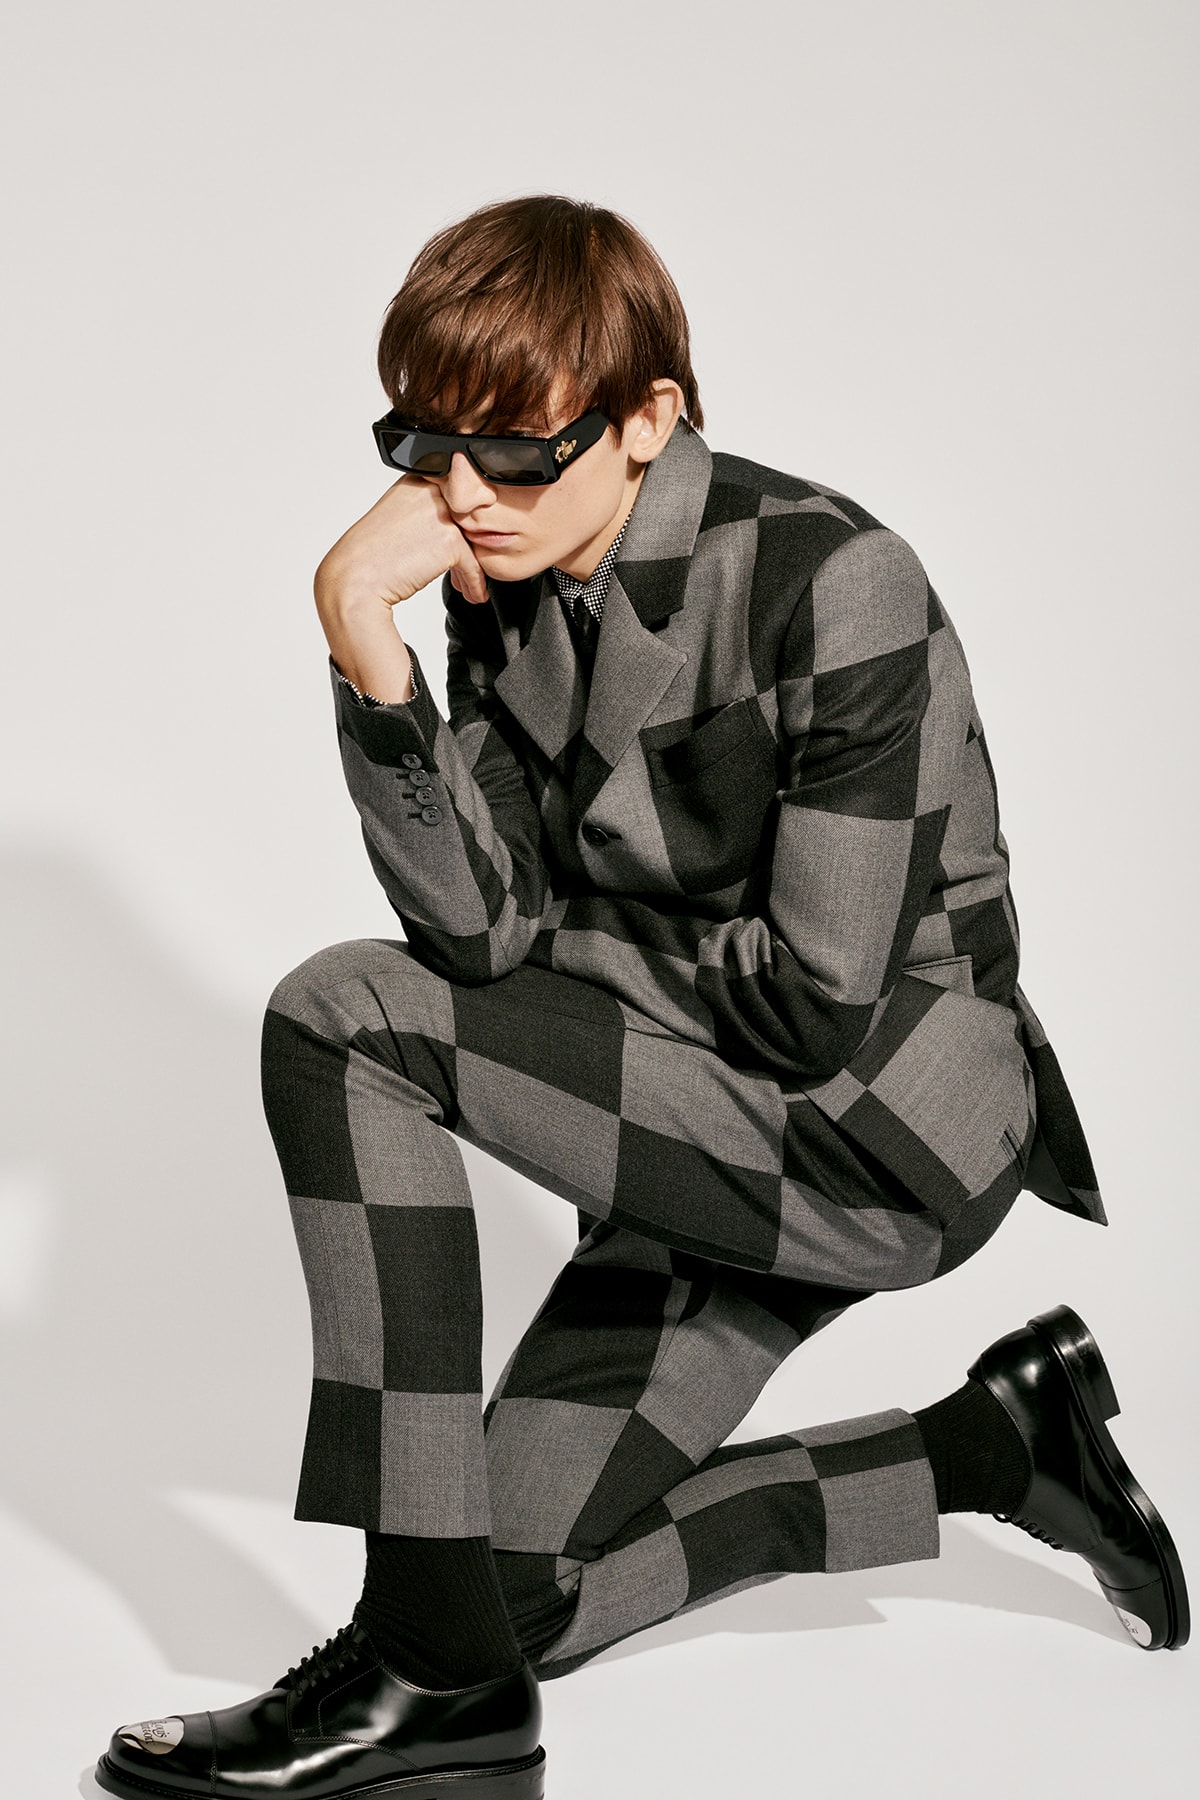 Louis Vuitton NIGO x Virgil Alboh LV2 Collection Lookbook Suit Damier Check Grey Black